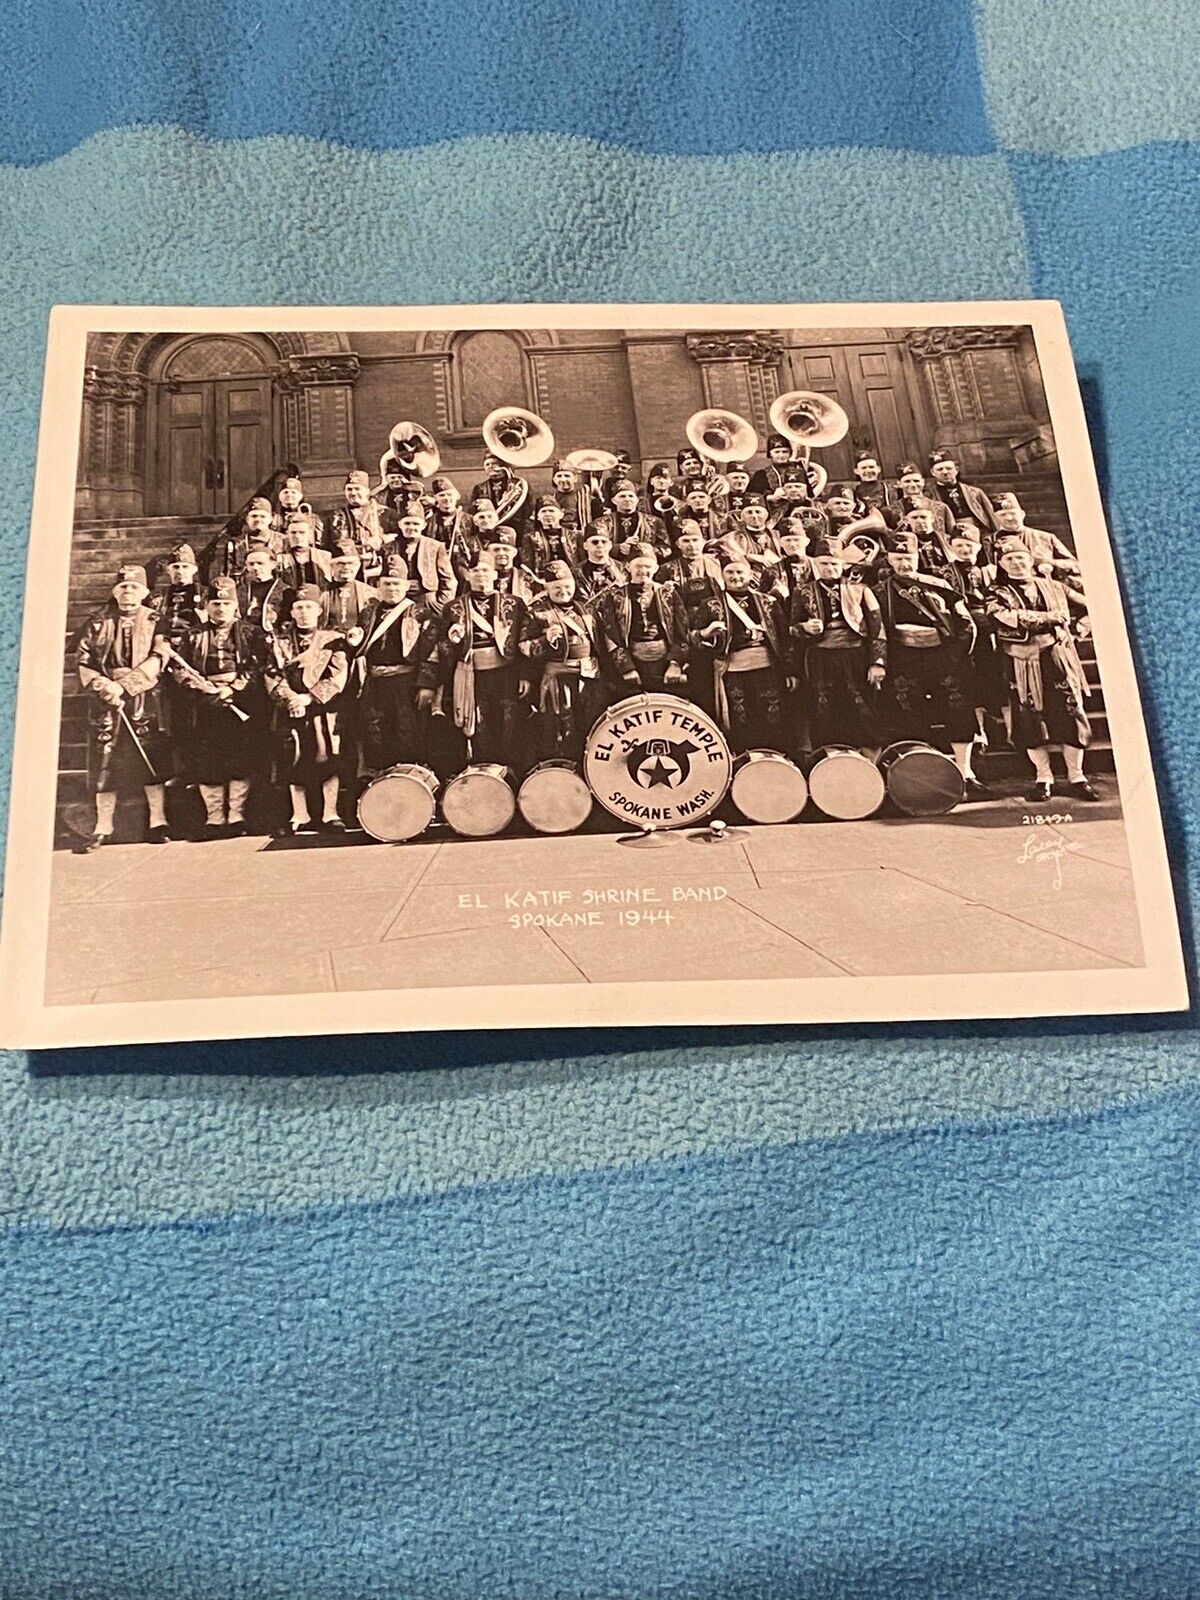 Vintage 1944 Photograph El Katif Shrine Band, Spokane, WA (Original 8x10)